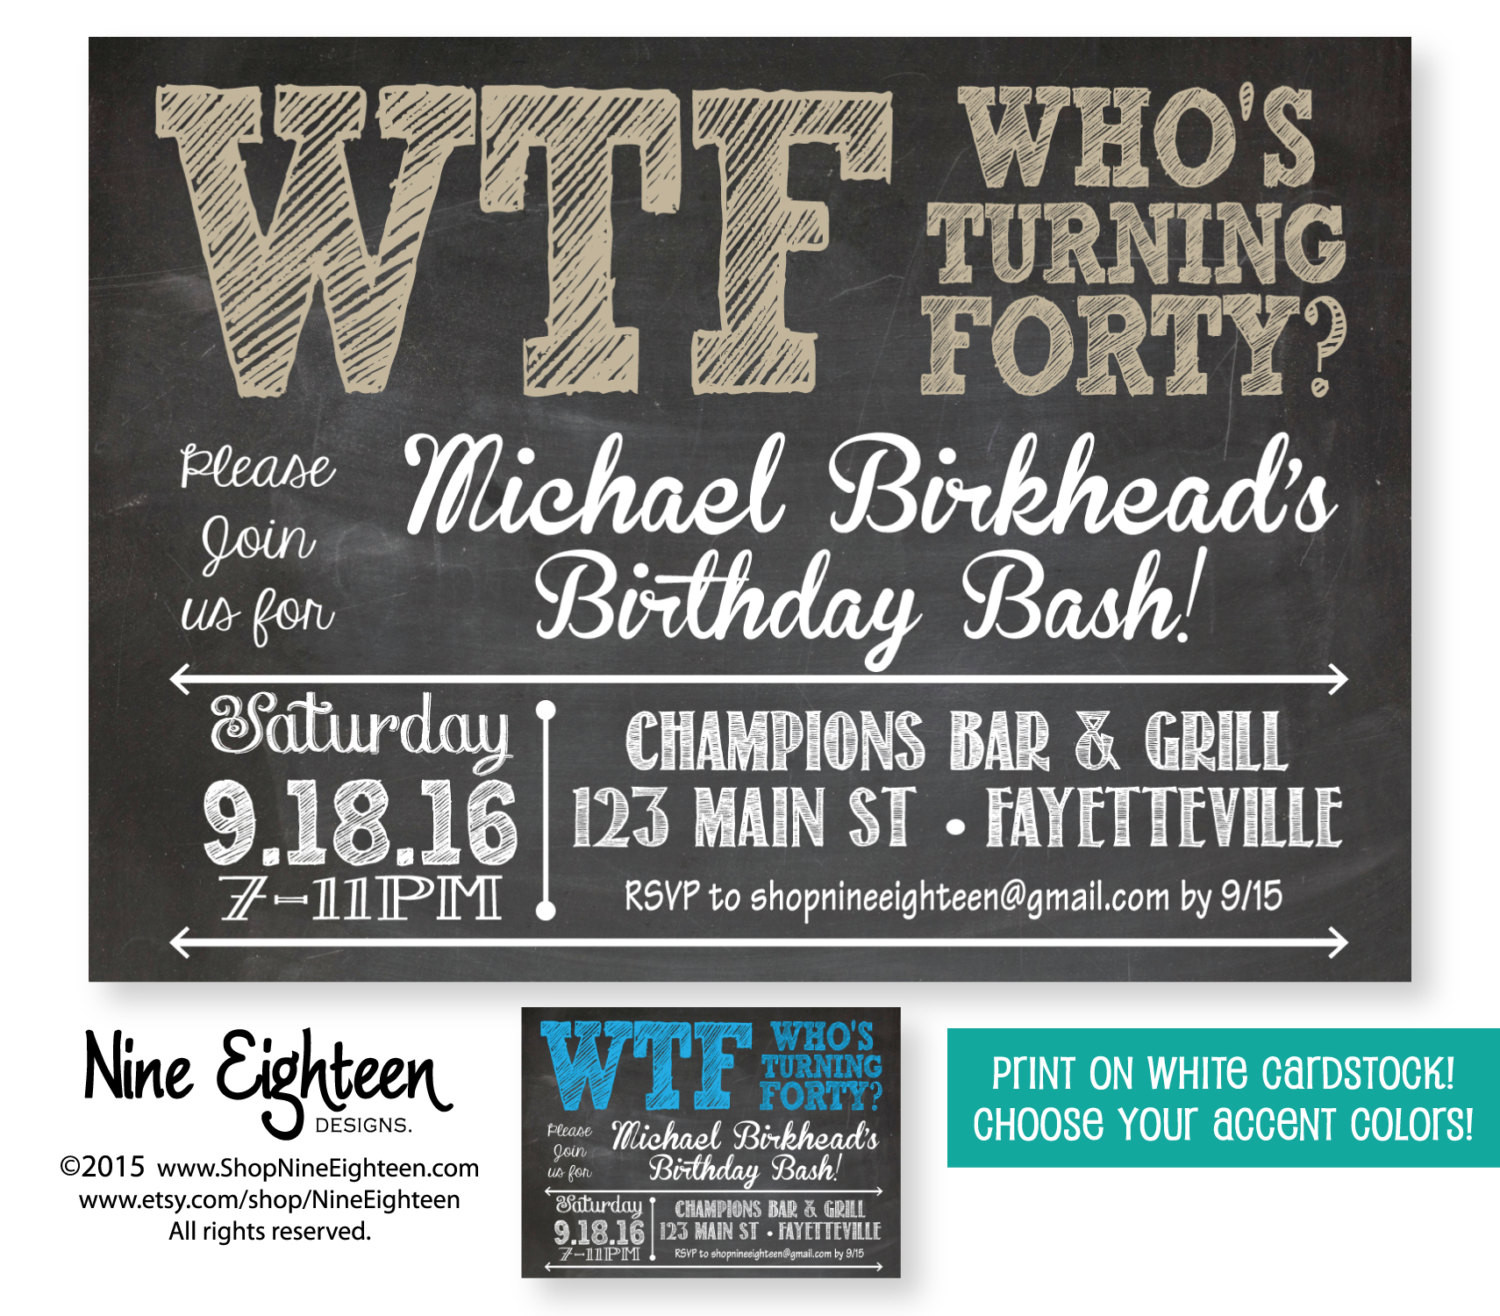 Funny 40th Birthday Invitations
 40th Birthday Party Invitation WTF Who s Turning by